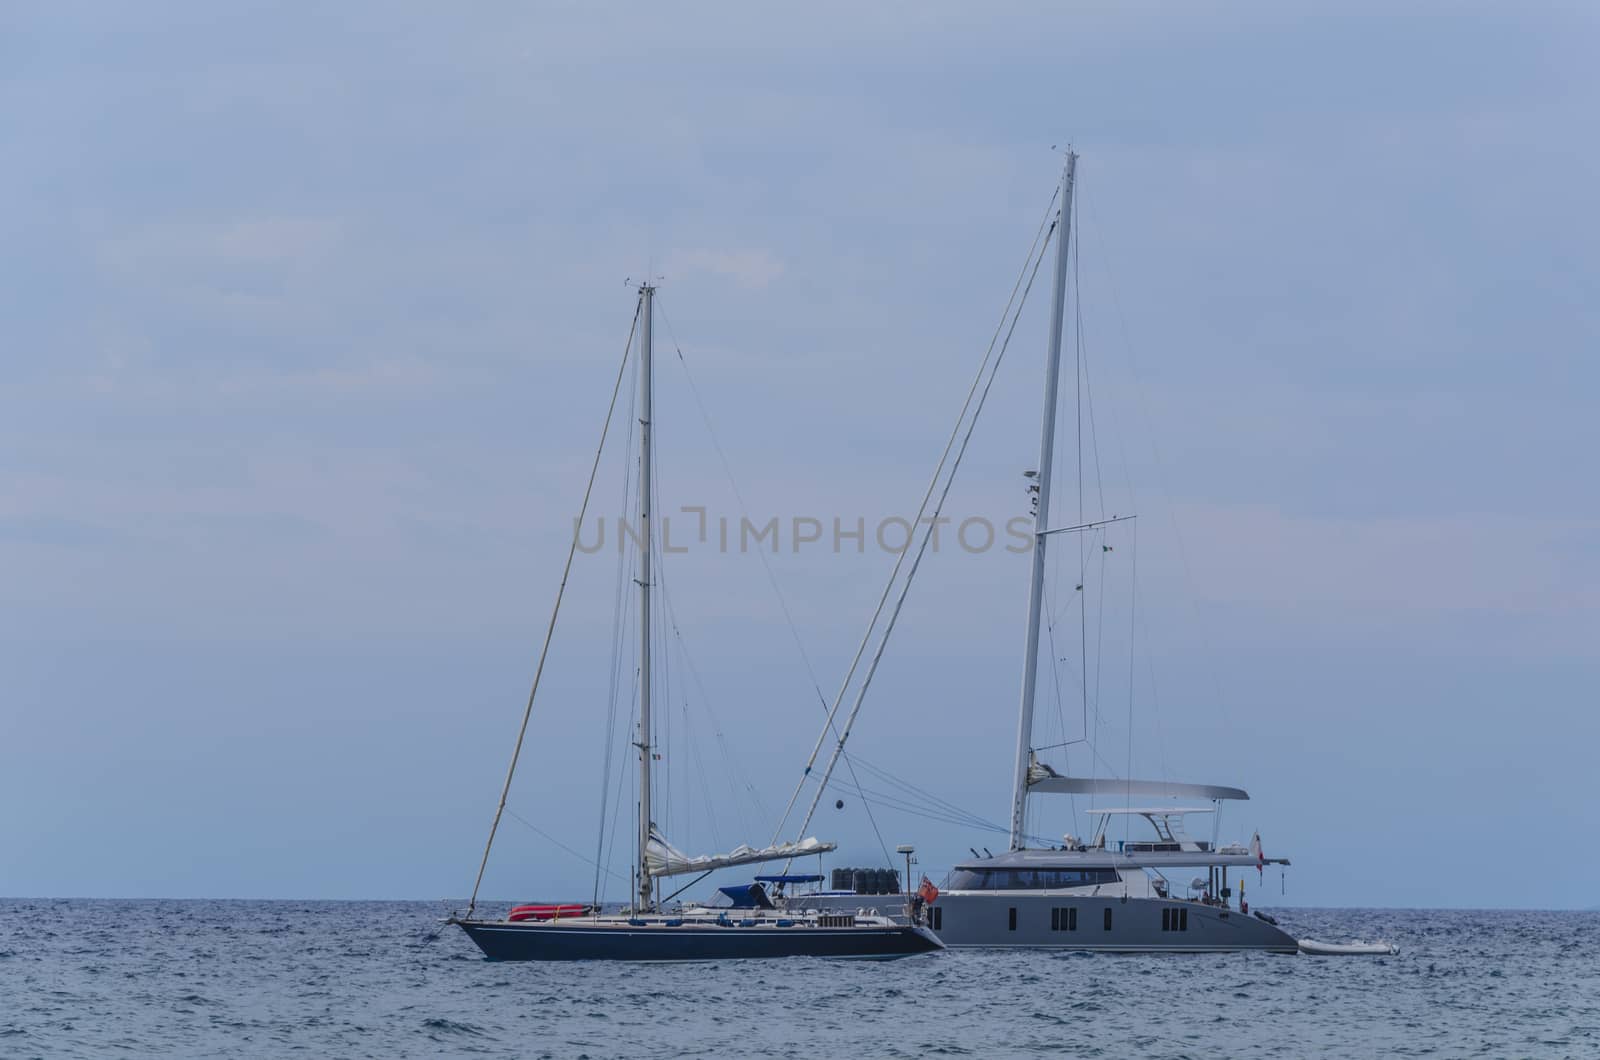 On the Tyrrhenian sea off the coast of Lipari island sail two modern sailing boats